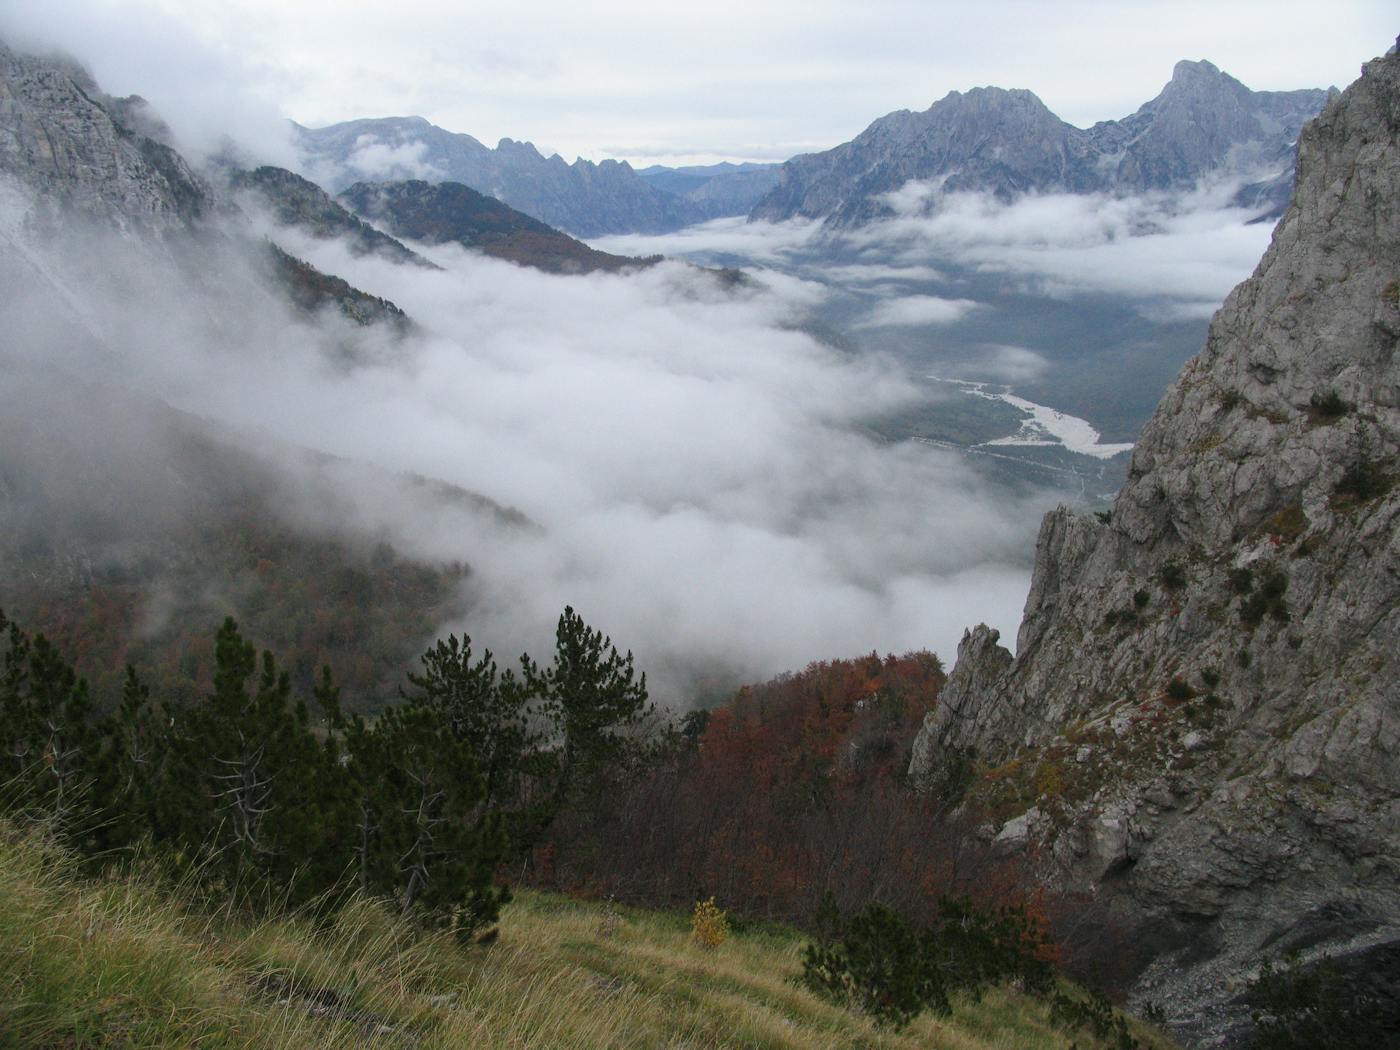 Dinaric Mountains & Balkan Mixed Forests (PA15)